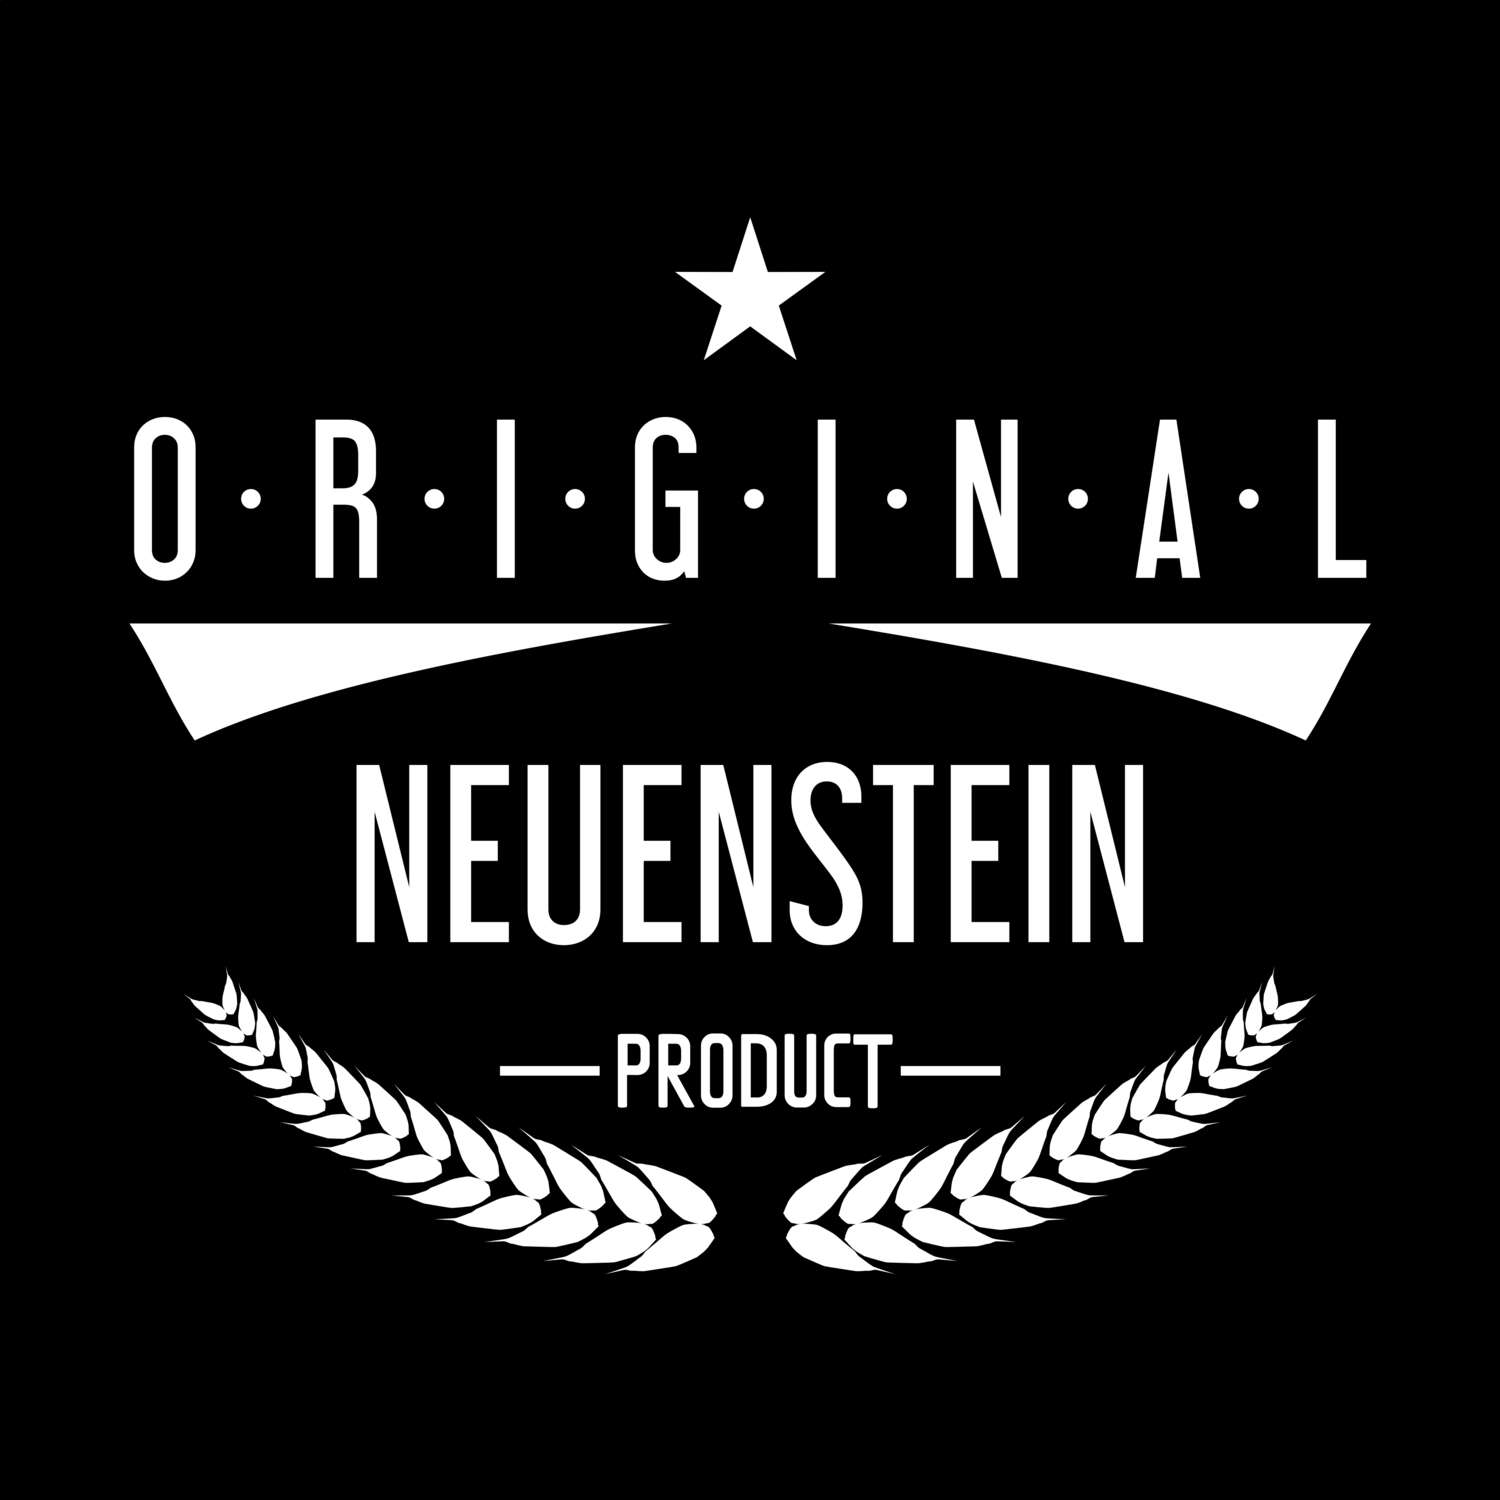 Neuenstein T-Shirt »Original Product«